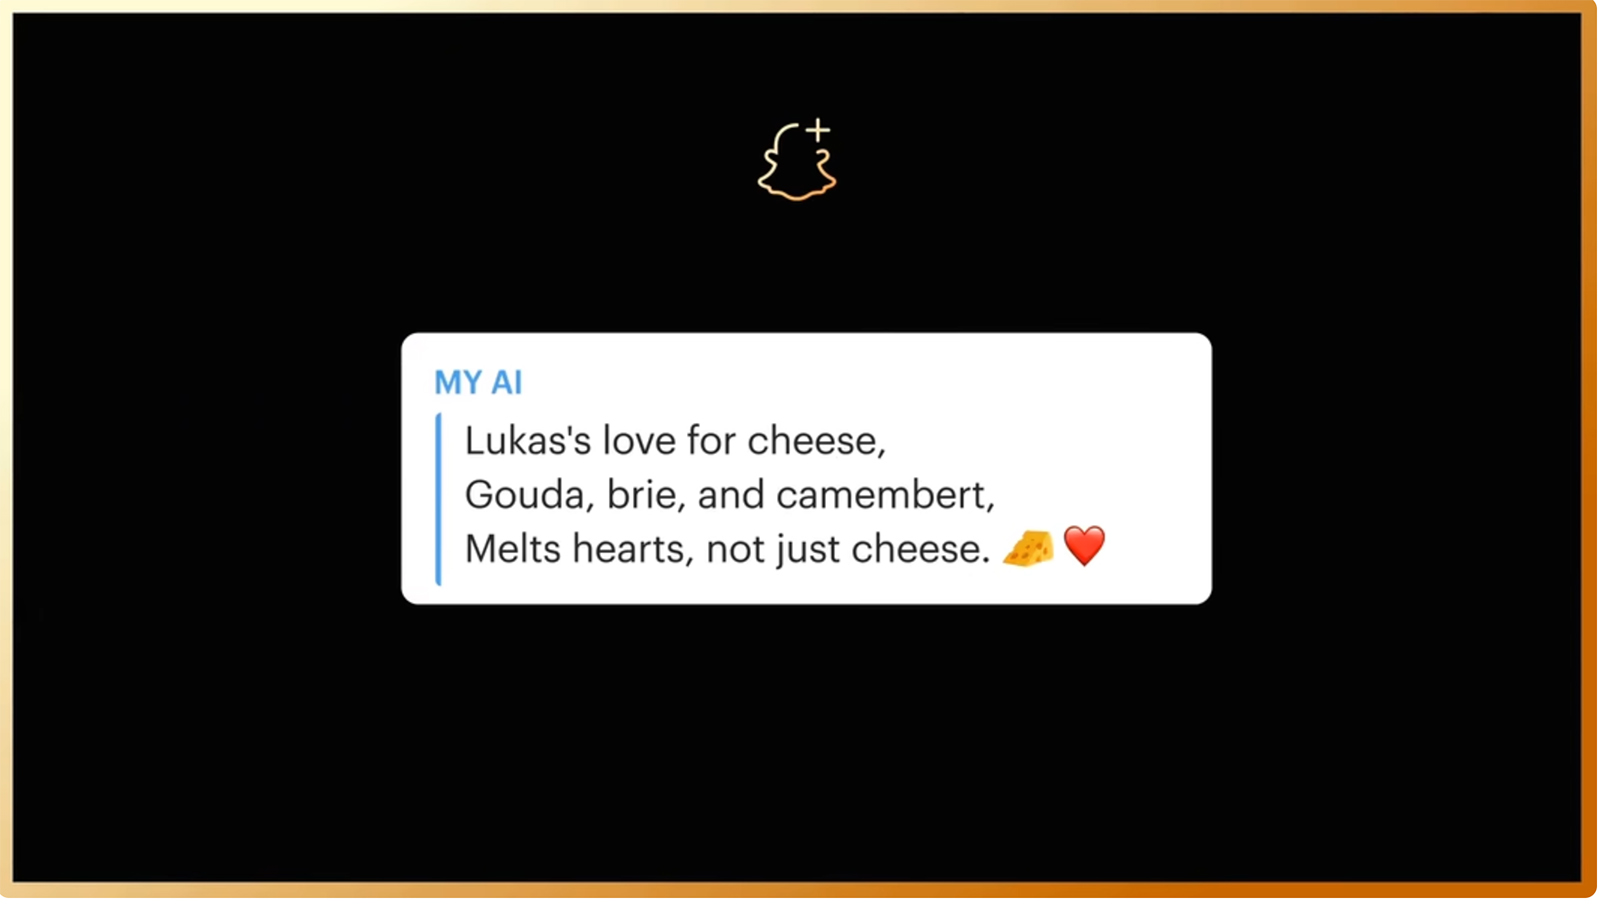 An example of Snapchat's My AI chatbot creating a haiku poem